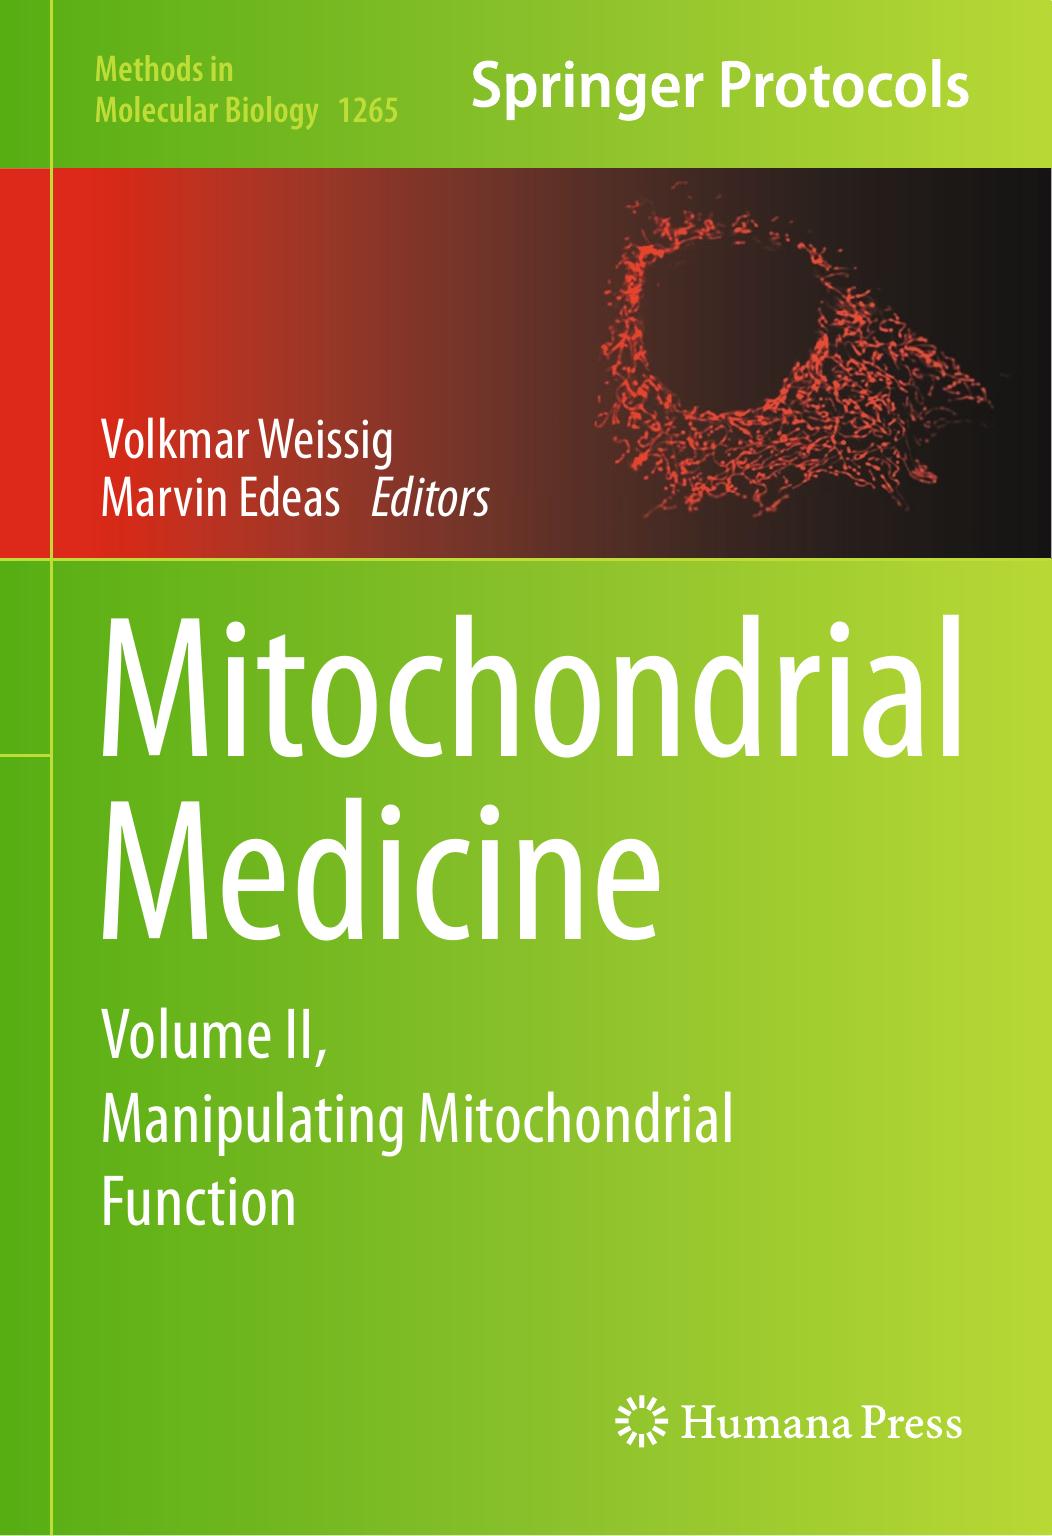 Mitochondrial Medicine  Volume II, Manipulating Mitochondrial Function 2015.pdf